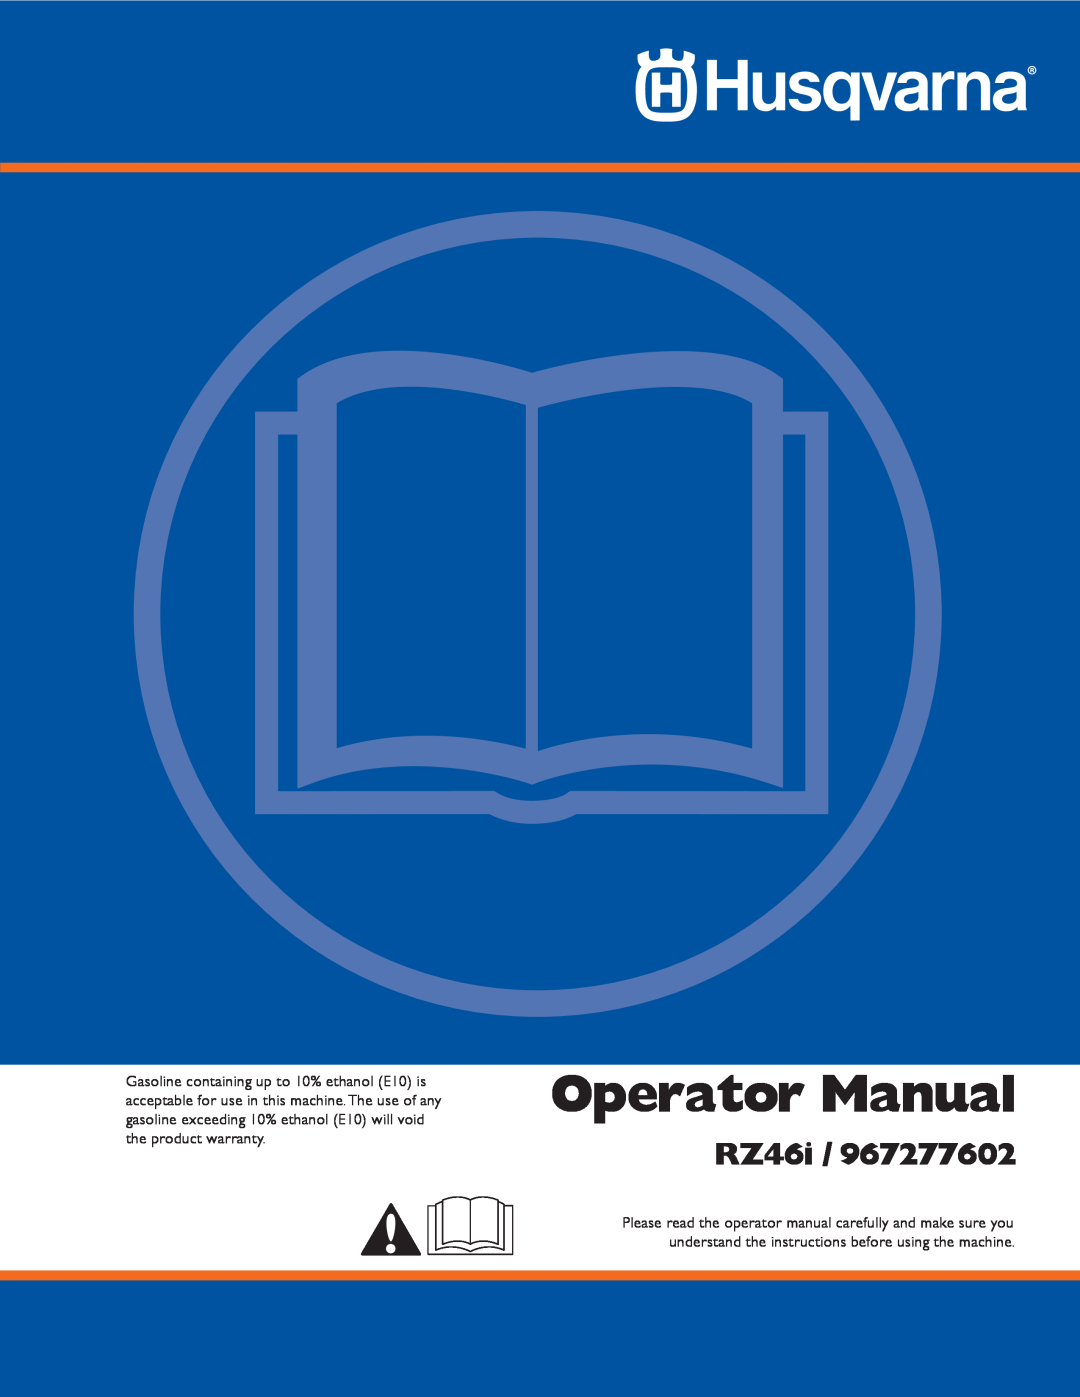 Husqvarna 967277601 warranty Operator Manual, RZ46i 